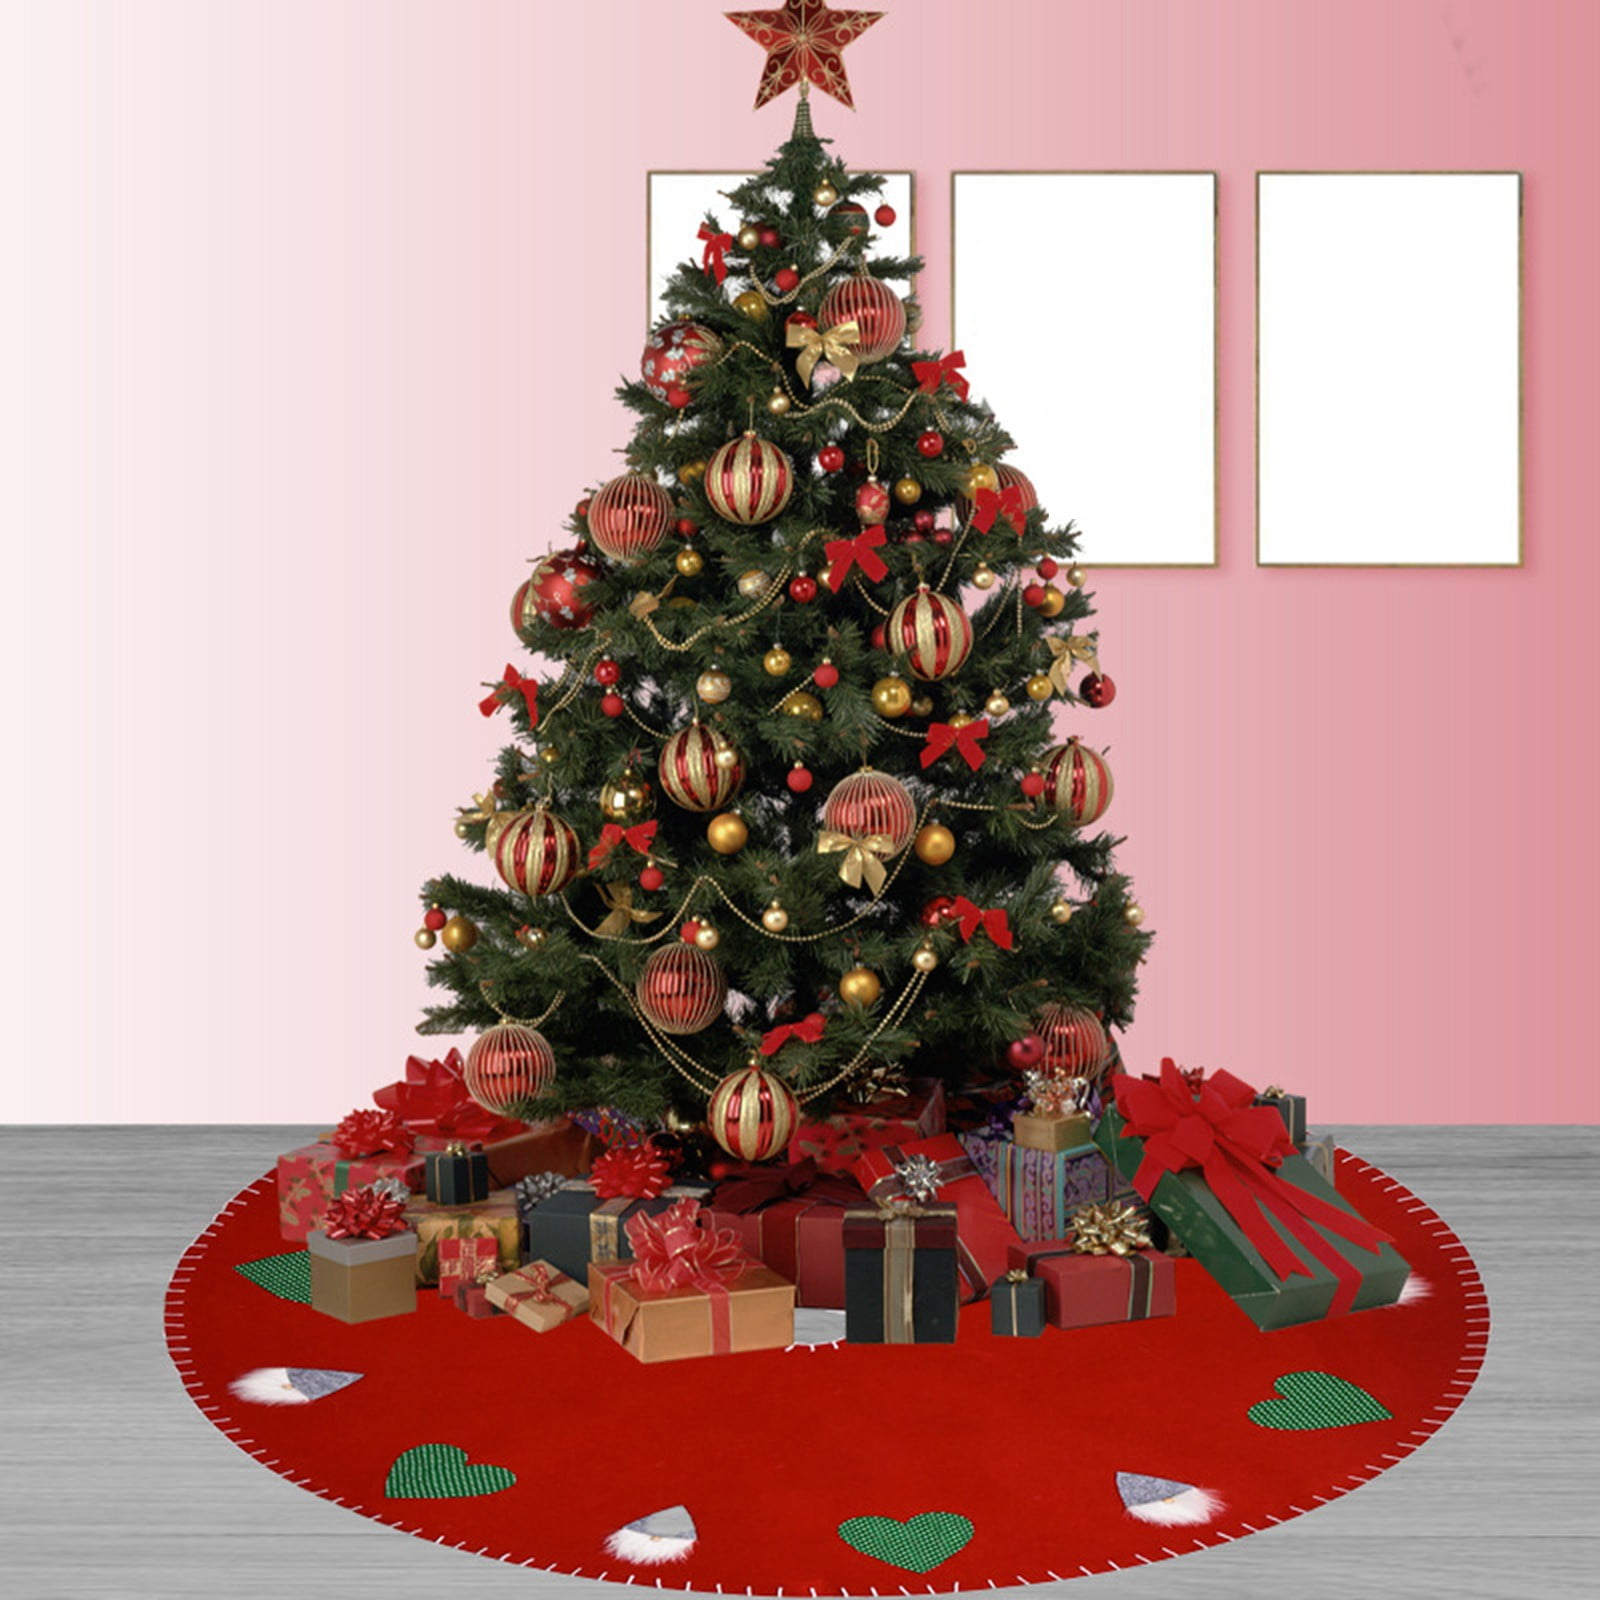 Details about   Christmas Tree Skirt Felt Apron Stands Base Cover Floor Mat Xmas Decoration US 